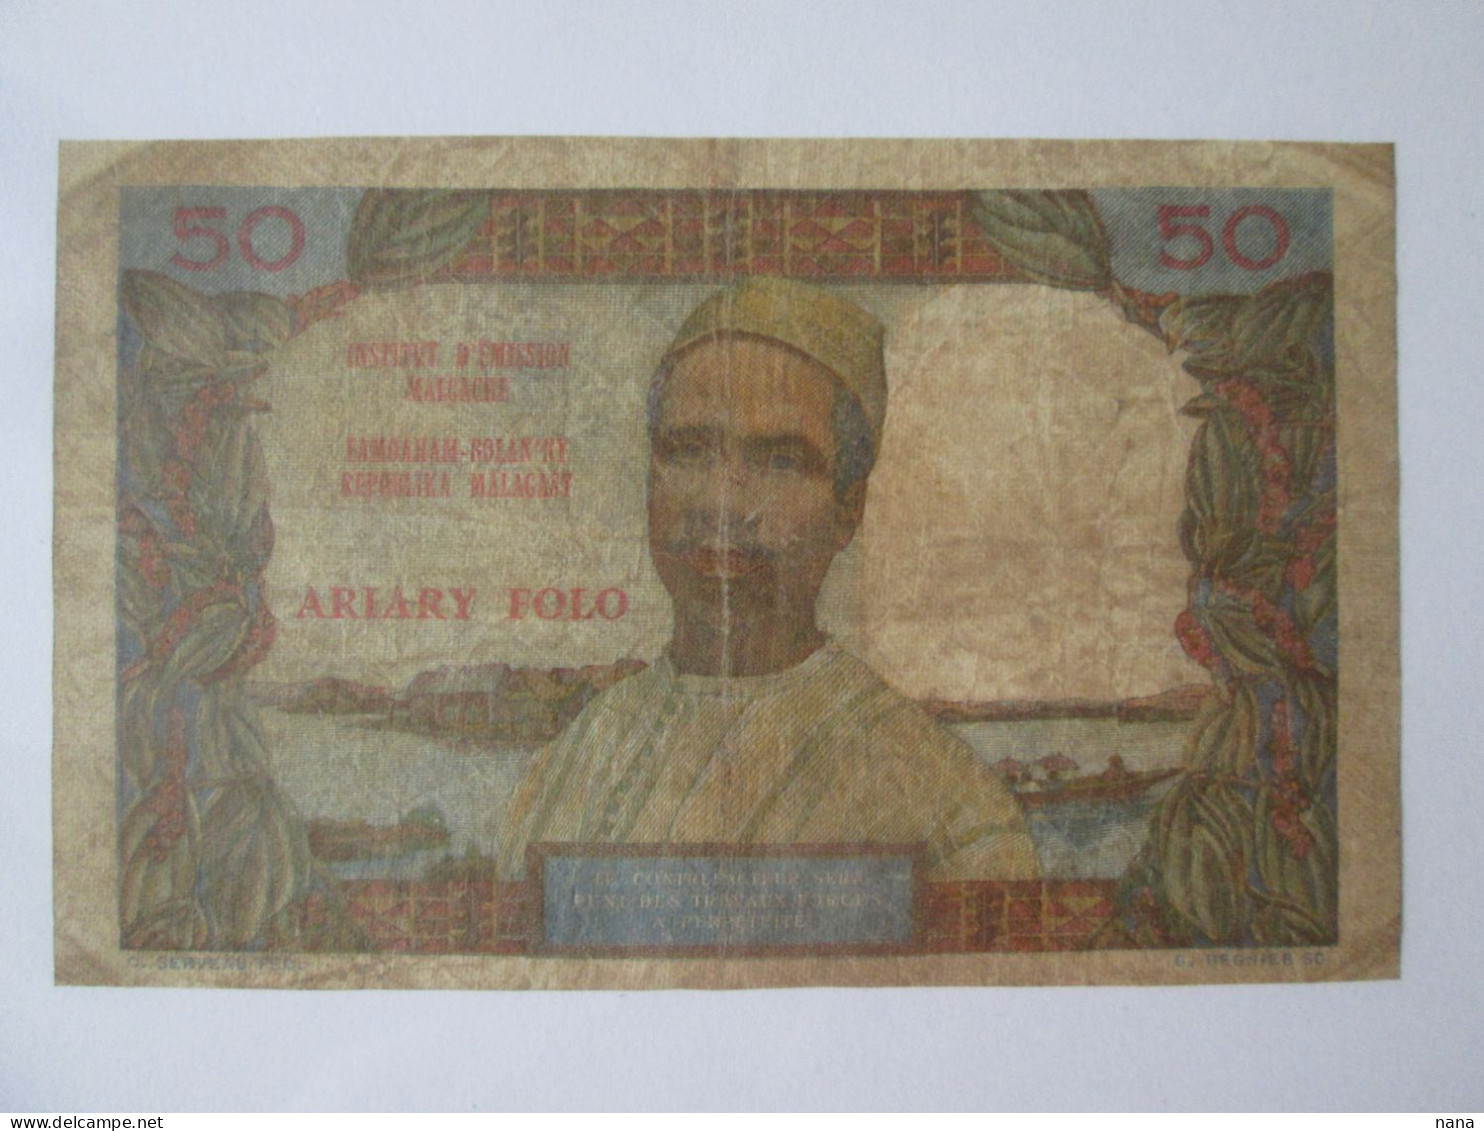 Madagascar 50 Francs 1969 Banknote See Pictures - Madagascar